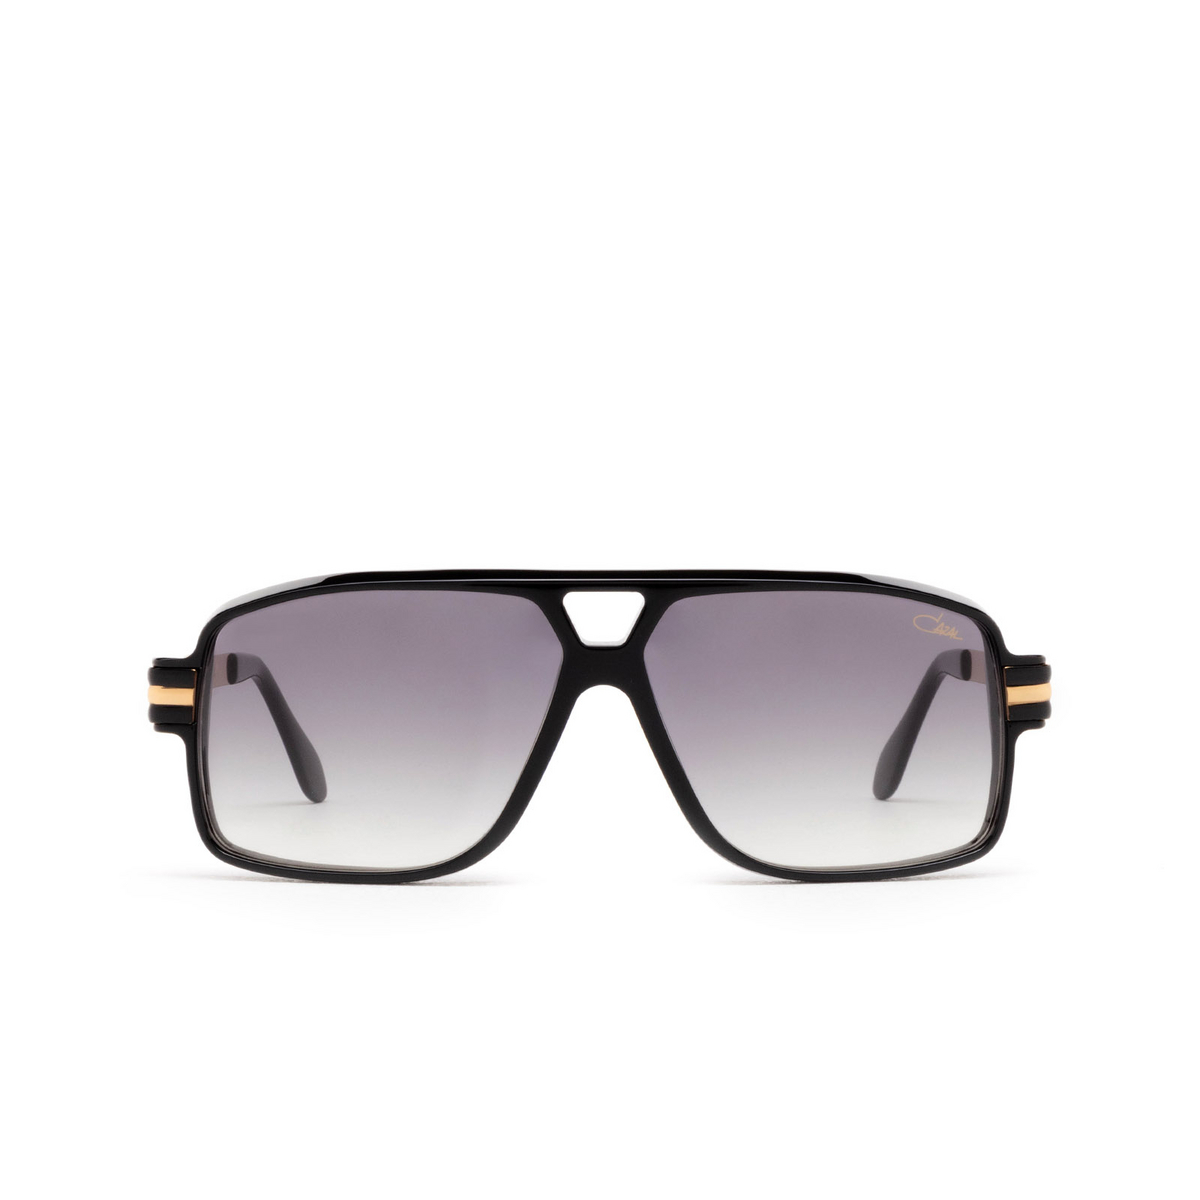 Cazal 6023/3 Sunglasses 001 Black - Gold - front view